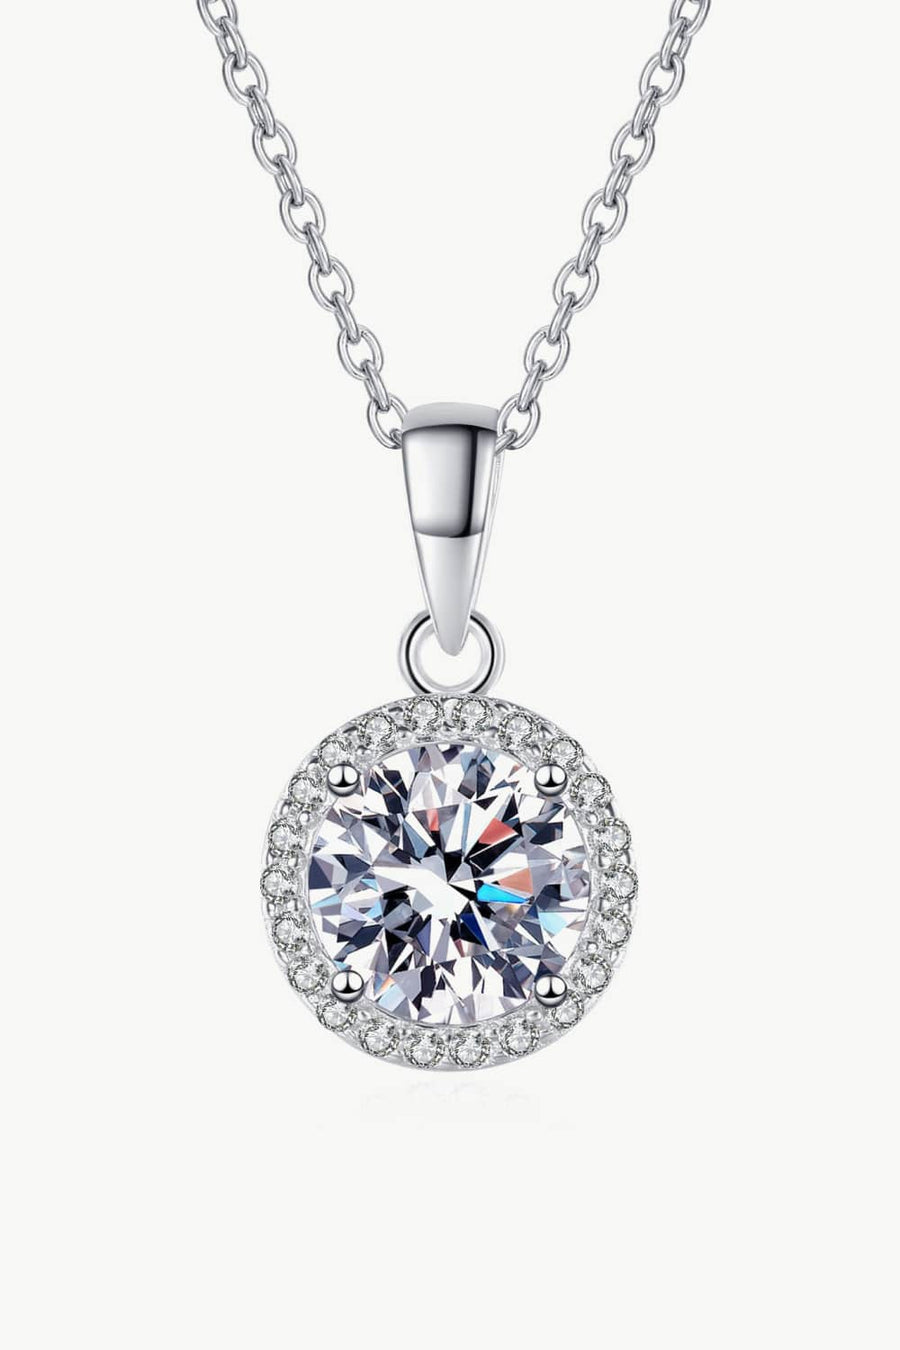 Best Diamond Jewelry Bundle Set Gift | Best Round Diamond Necklace, Earrings, Bracelet Jewelry Gift for Women, Mother, Wife, Daughter | MASON New York